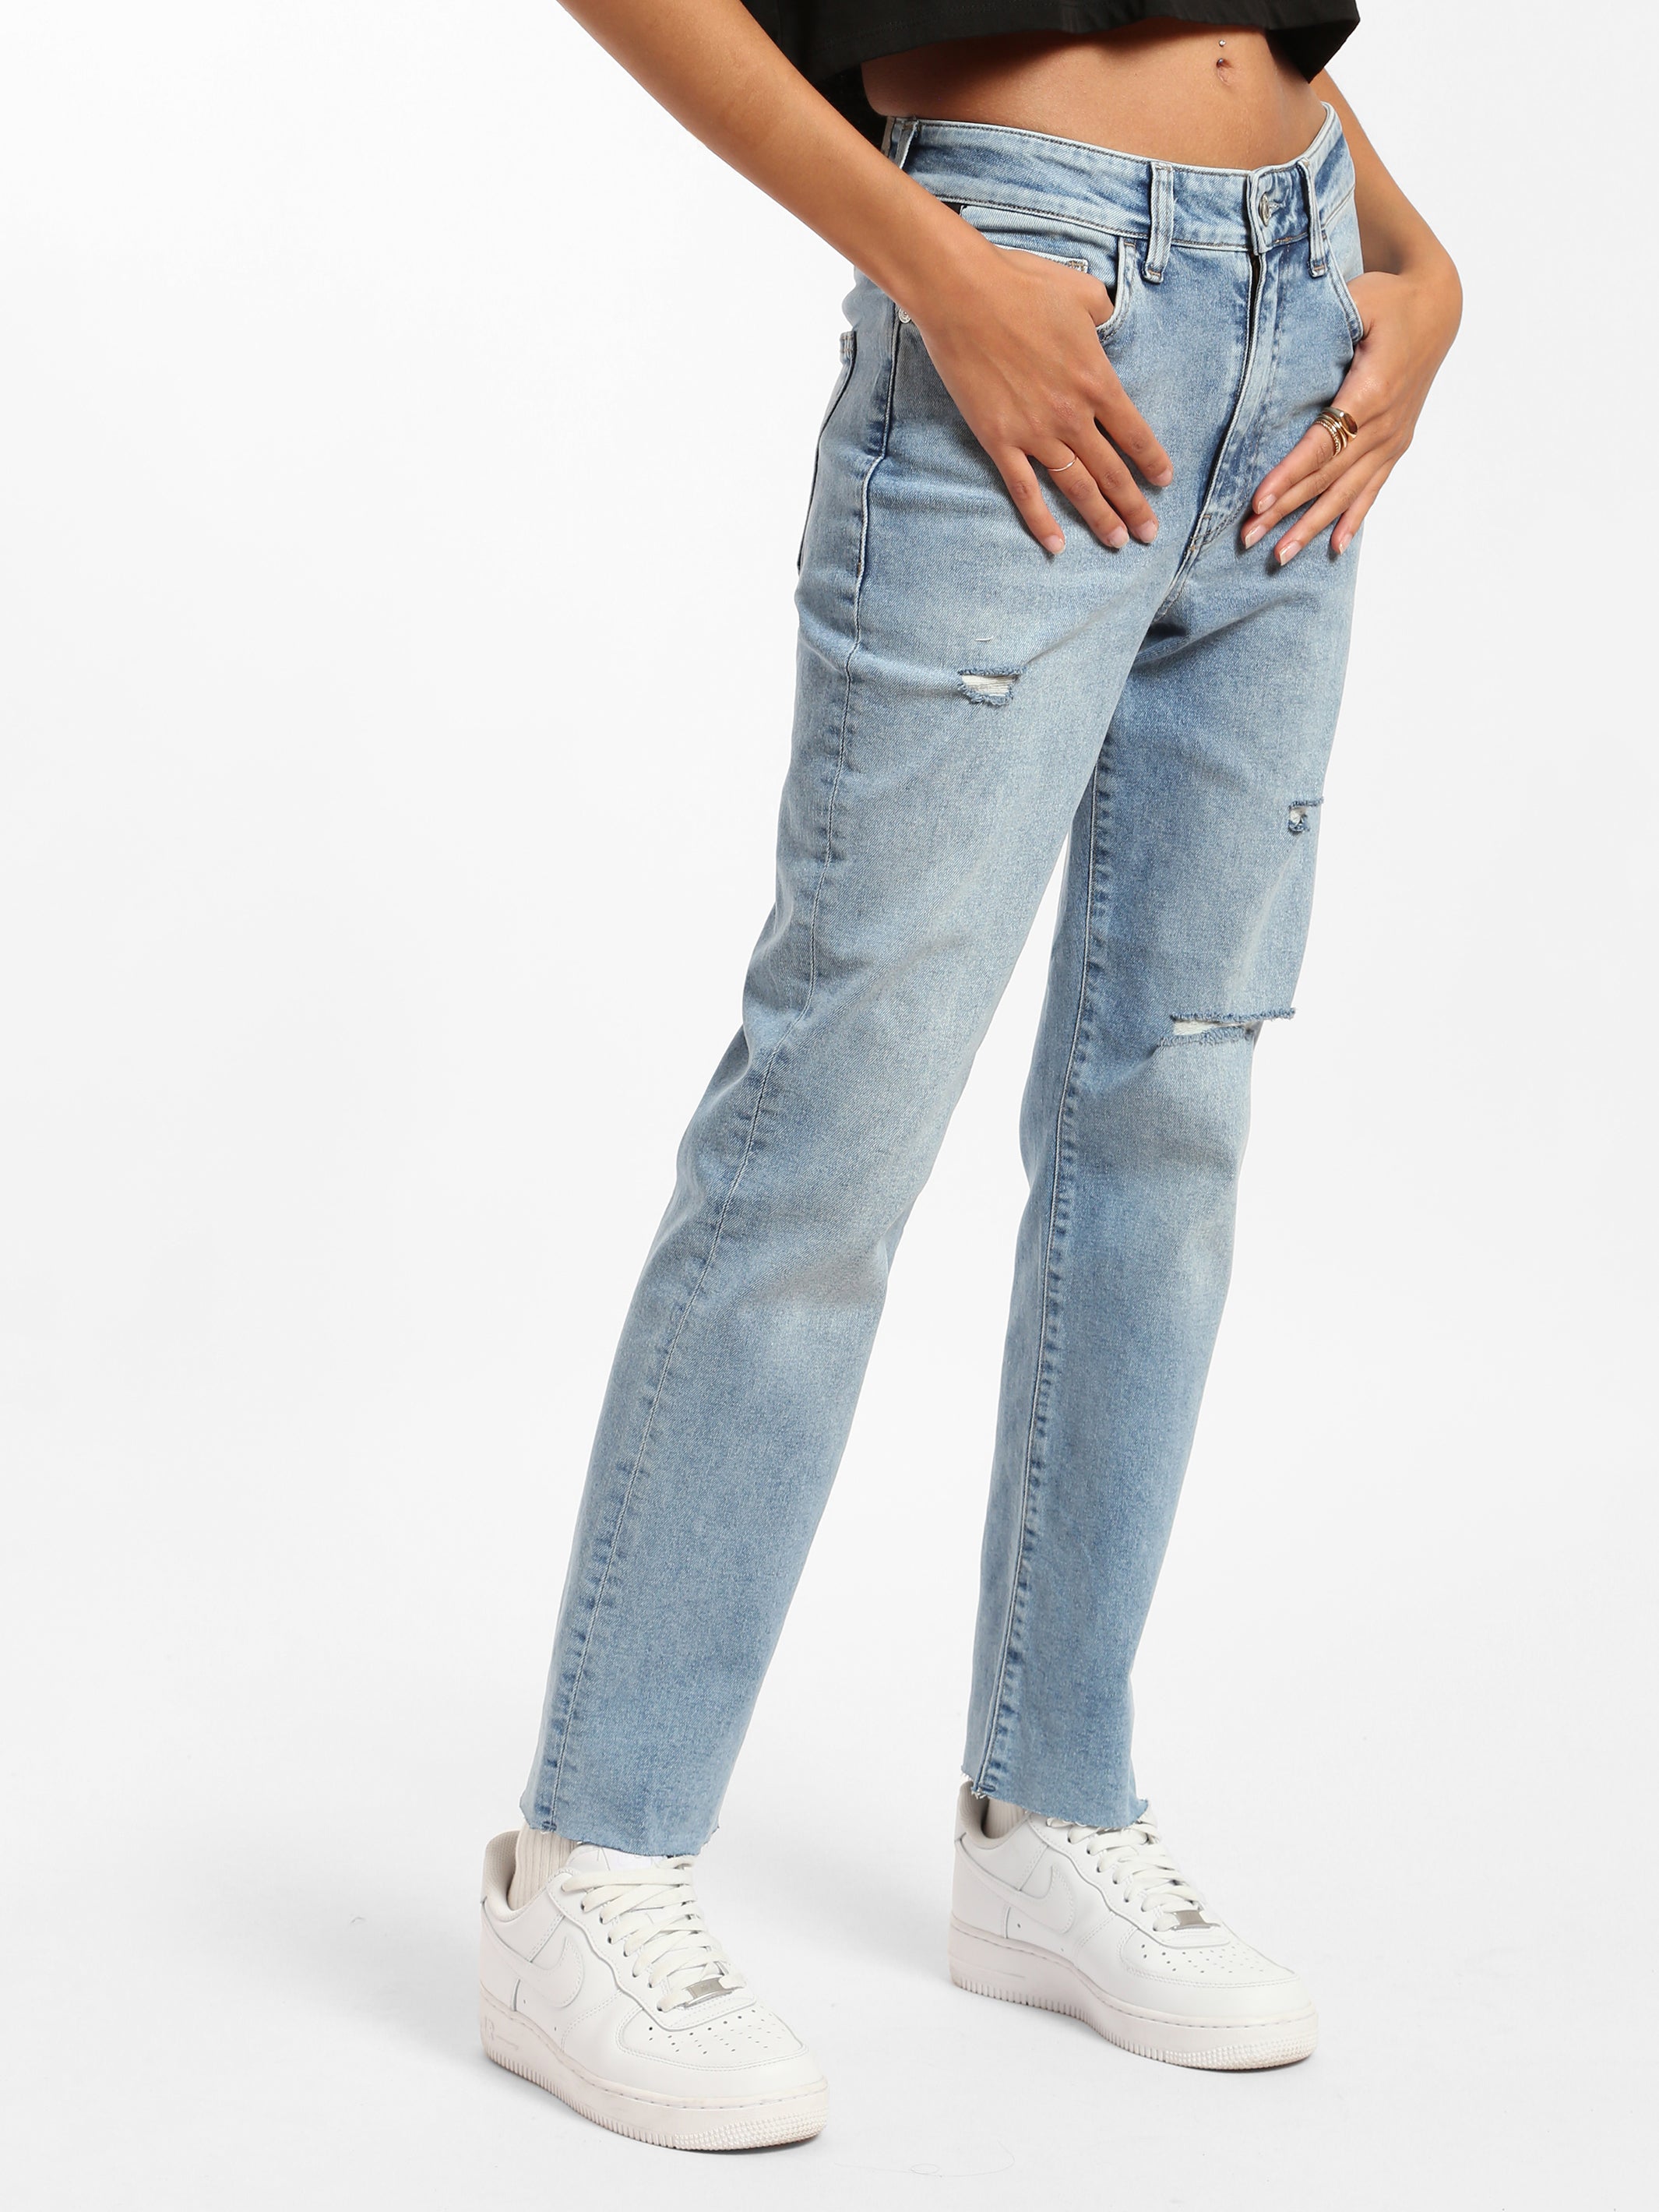 Brooklyn Industries Women's Metro Flare Jeans in Mid Denim